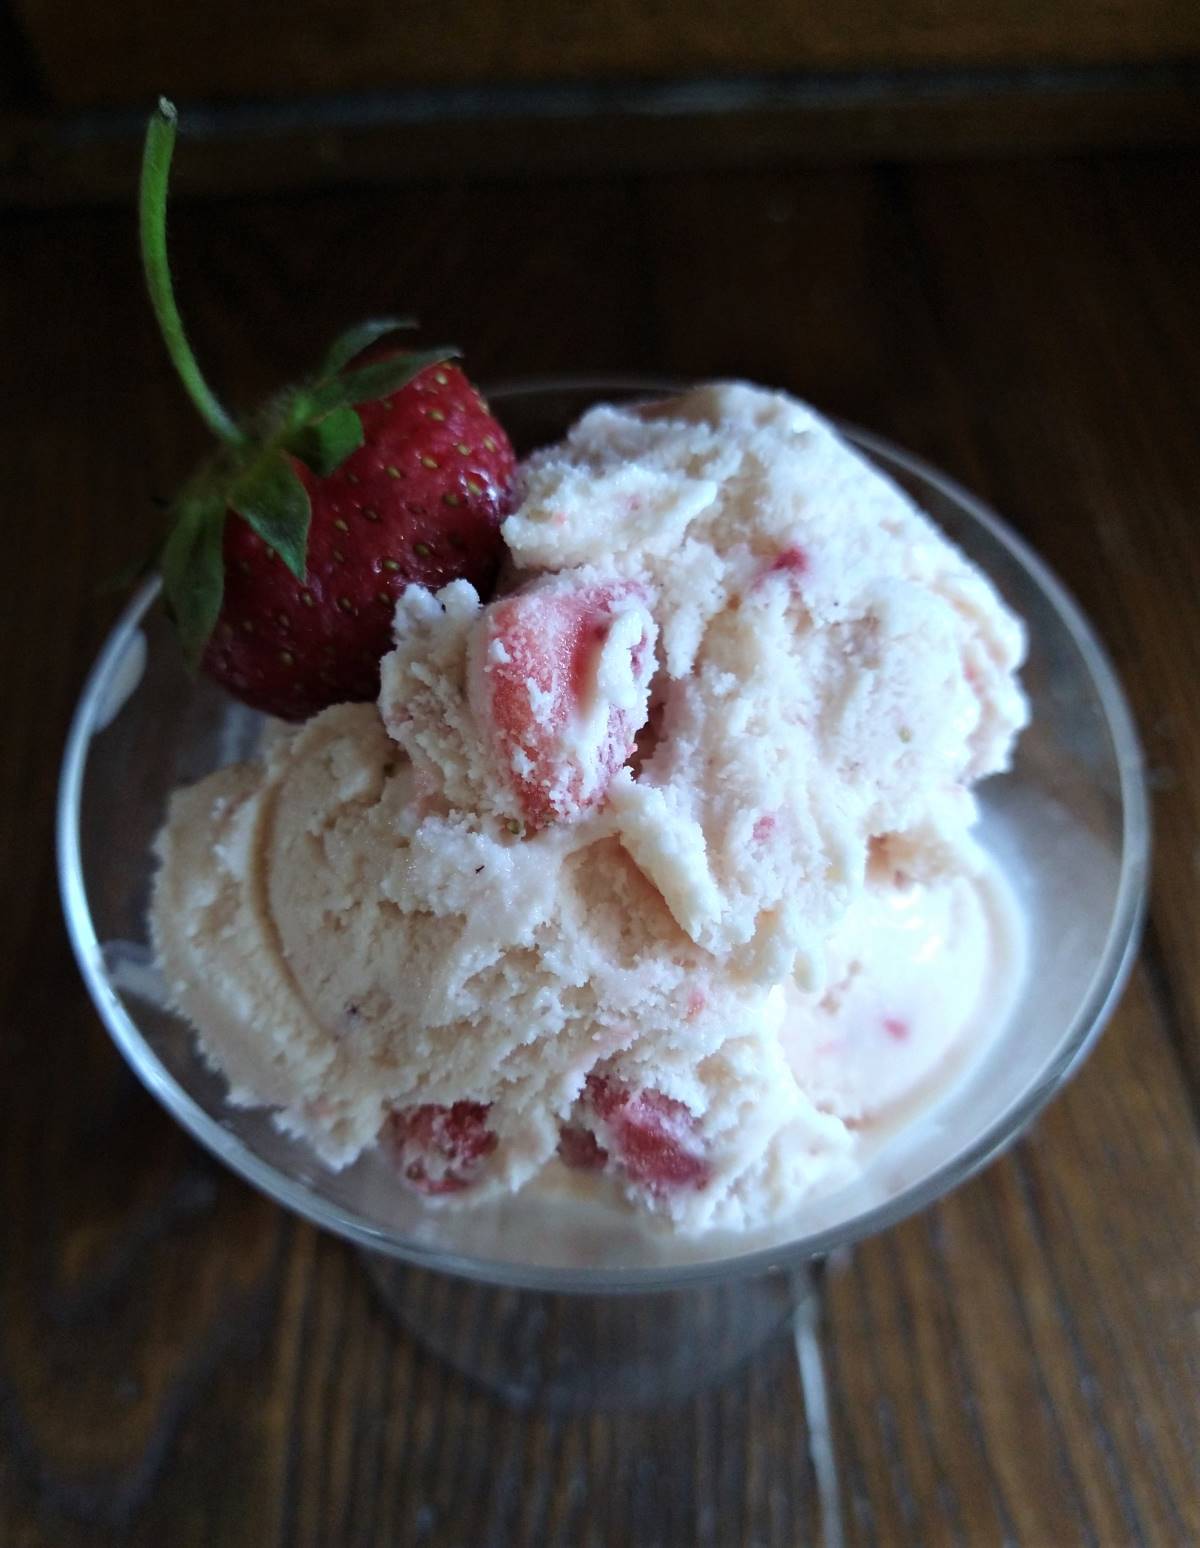 strawberry ice cream in glass garnished with fresh strawberry